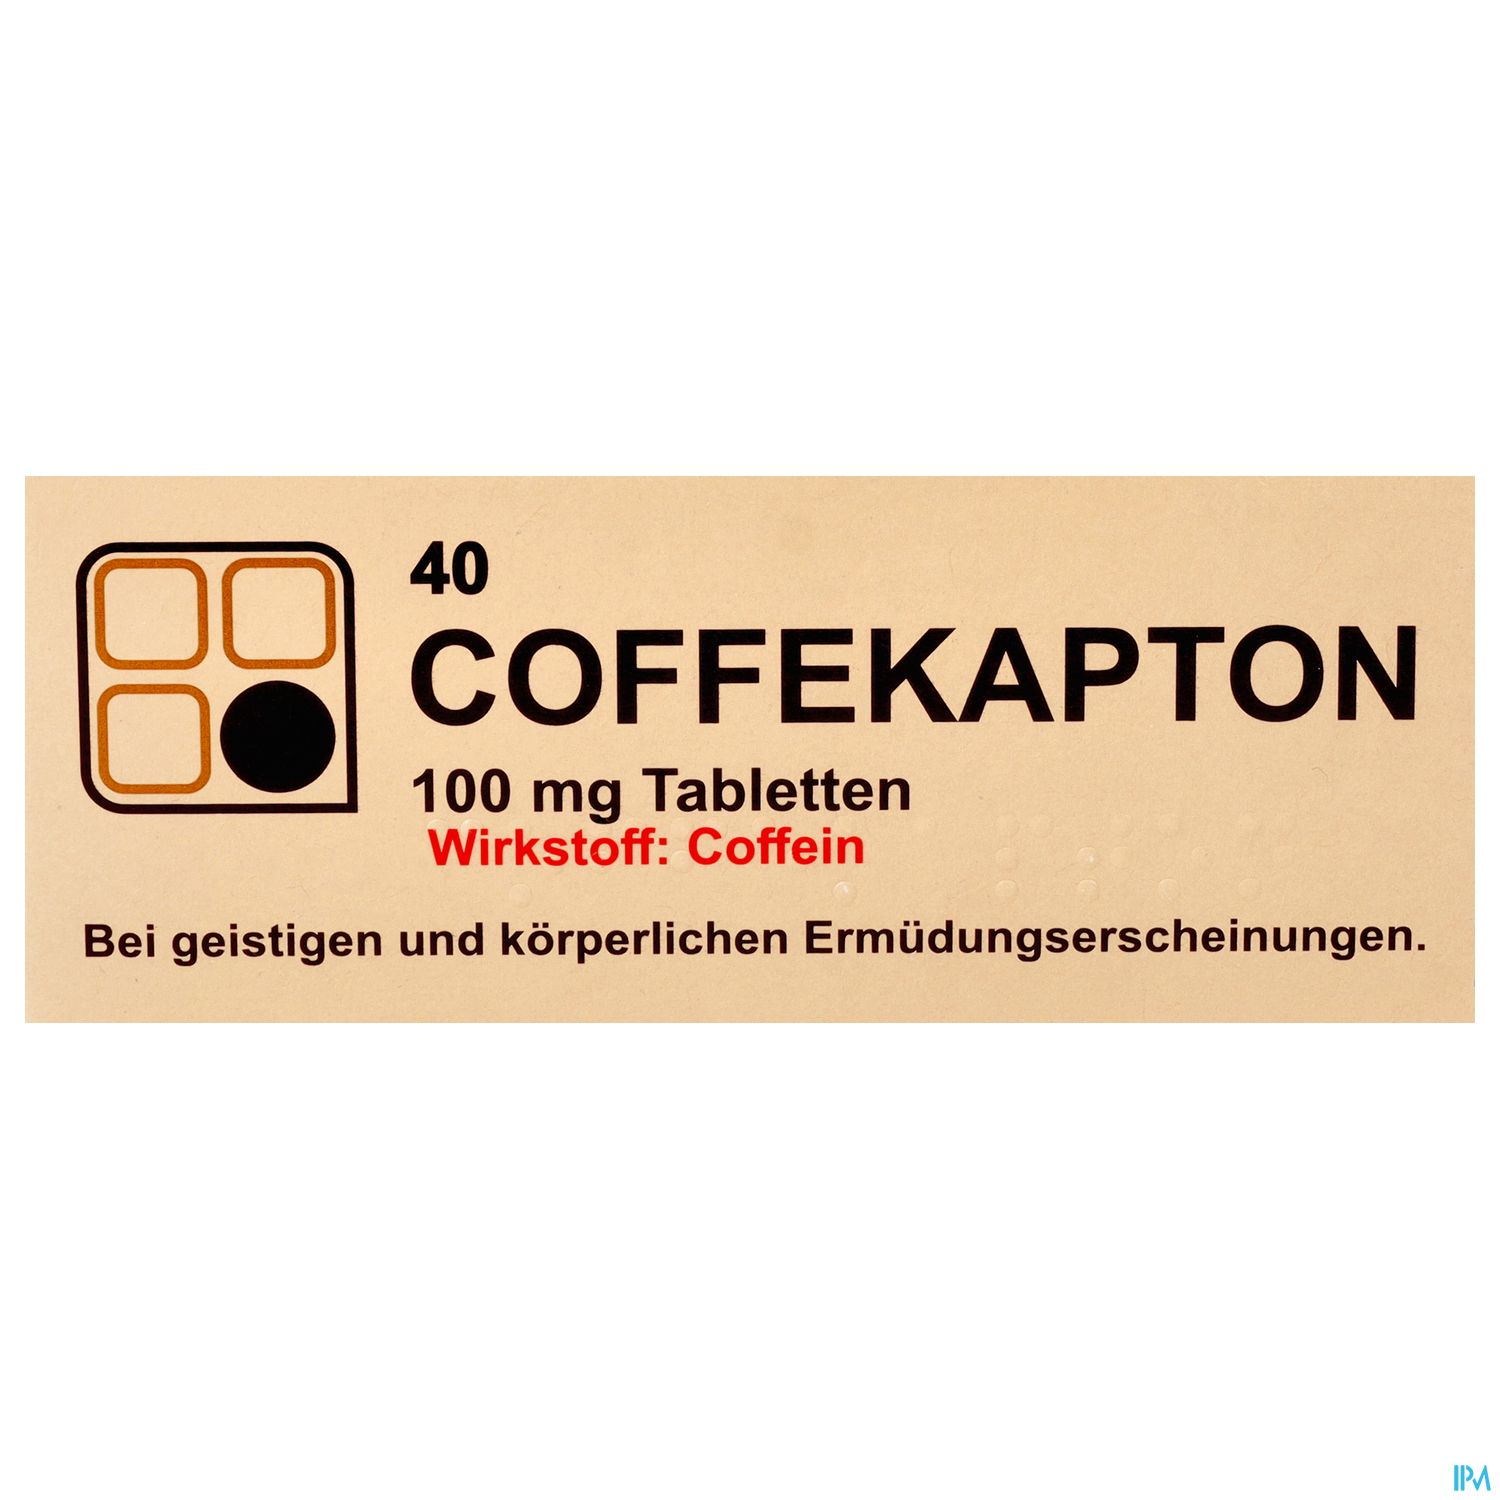 Coffekapton 100 mg - Tabletten